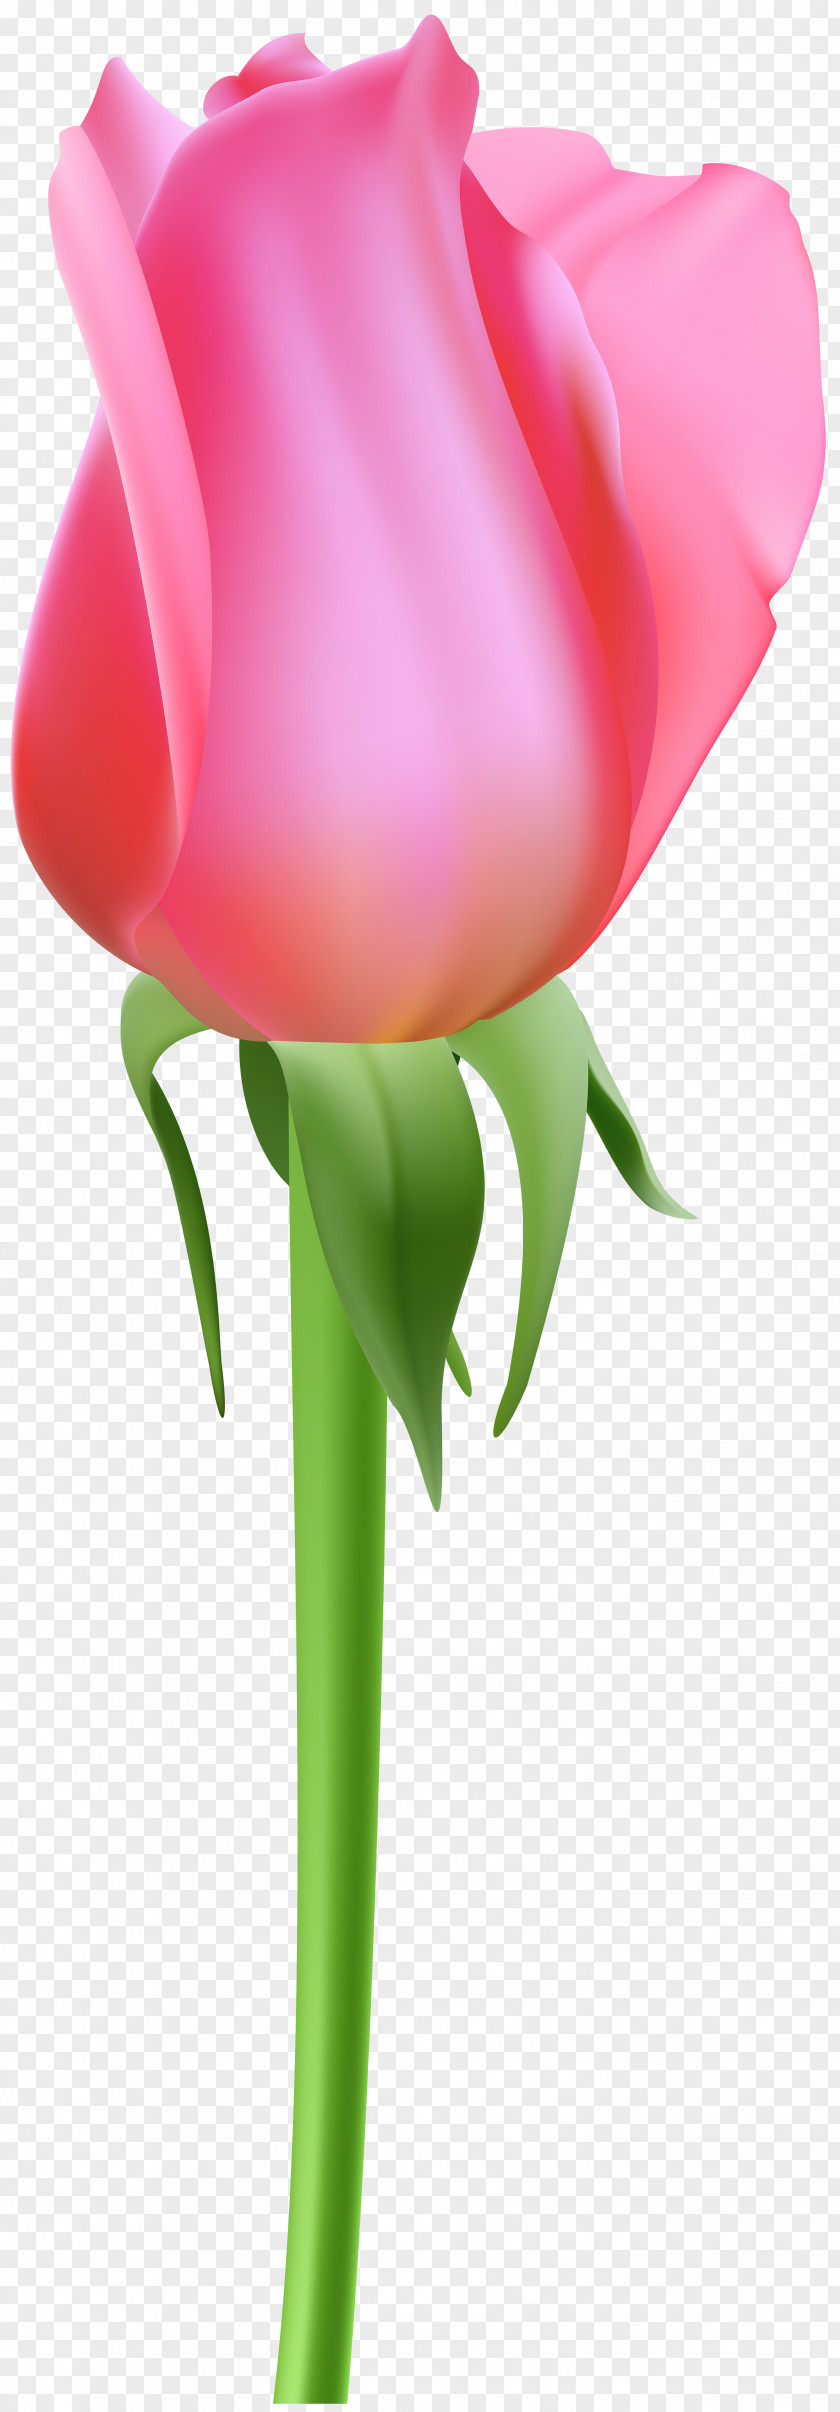 Rose Garden Roses Clip Art Image Graphics PNG